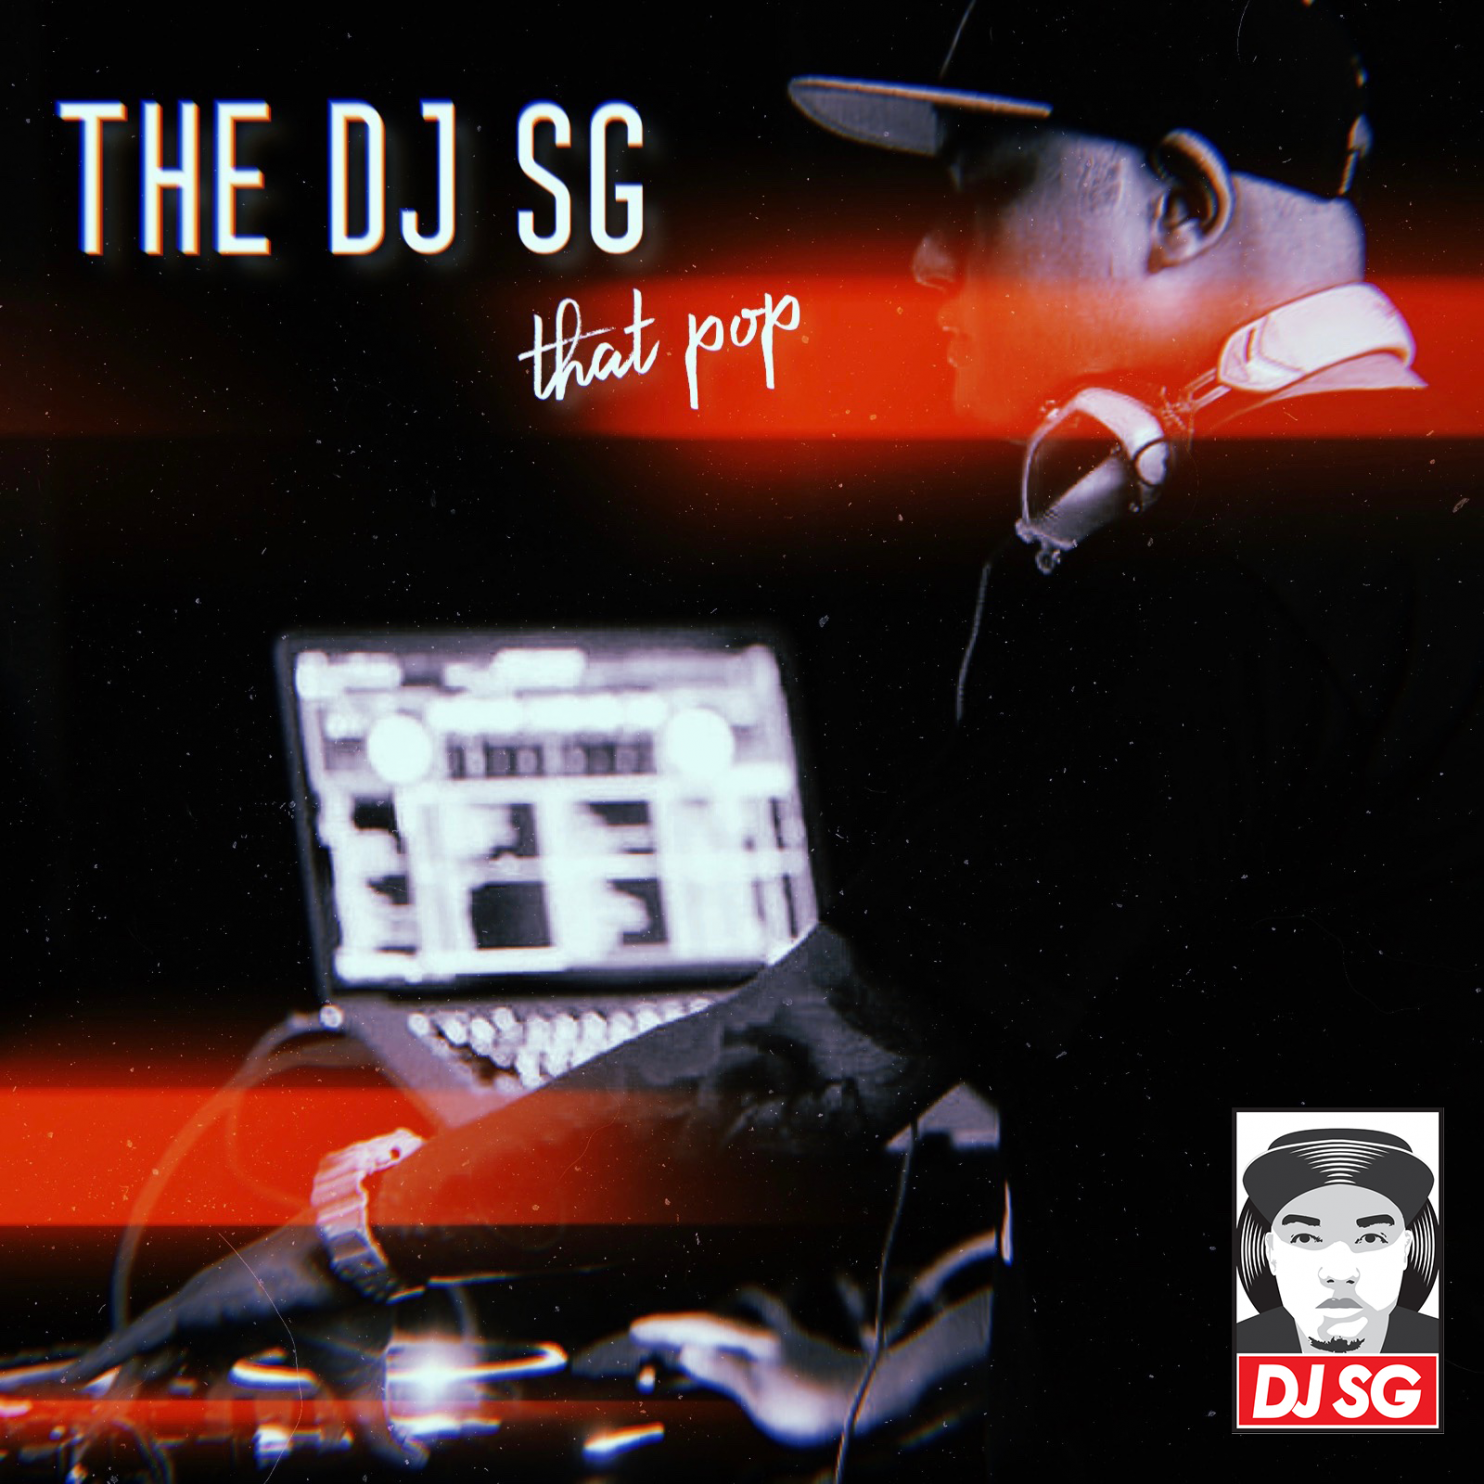 DJ SG - that pop (mix), episode 1